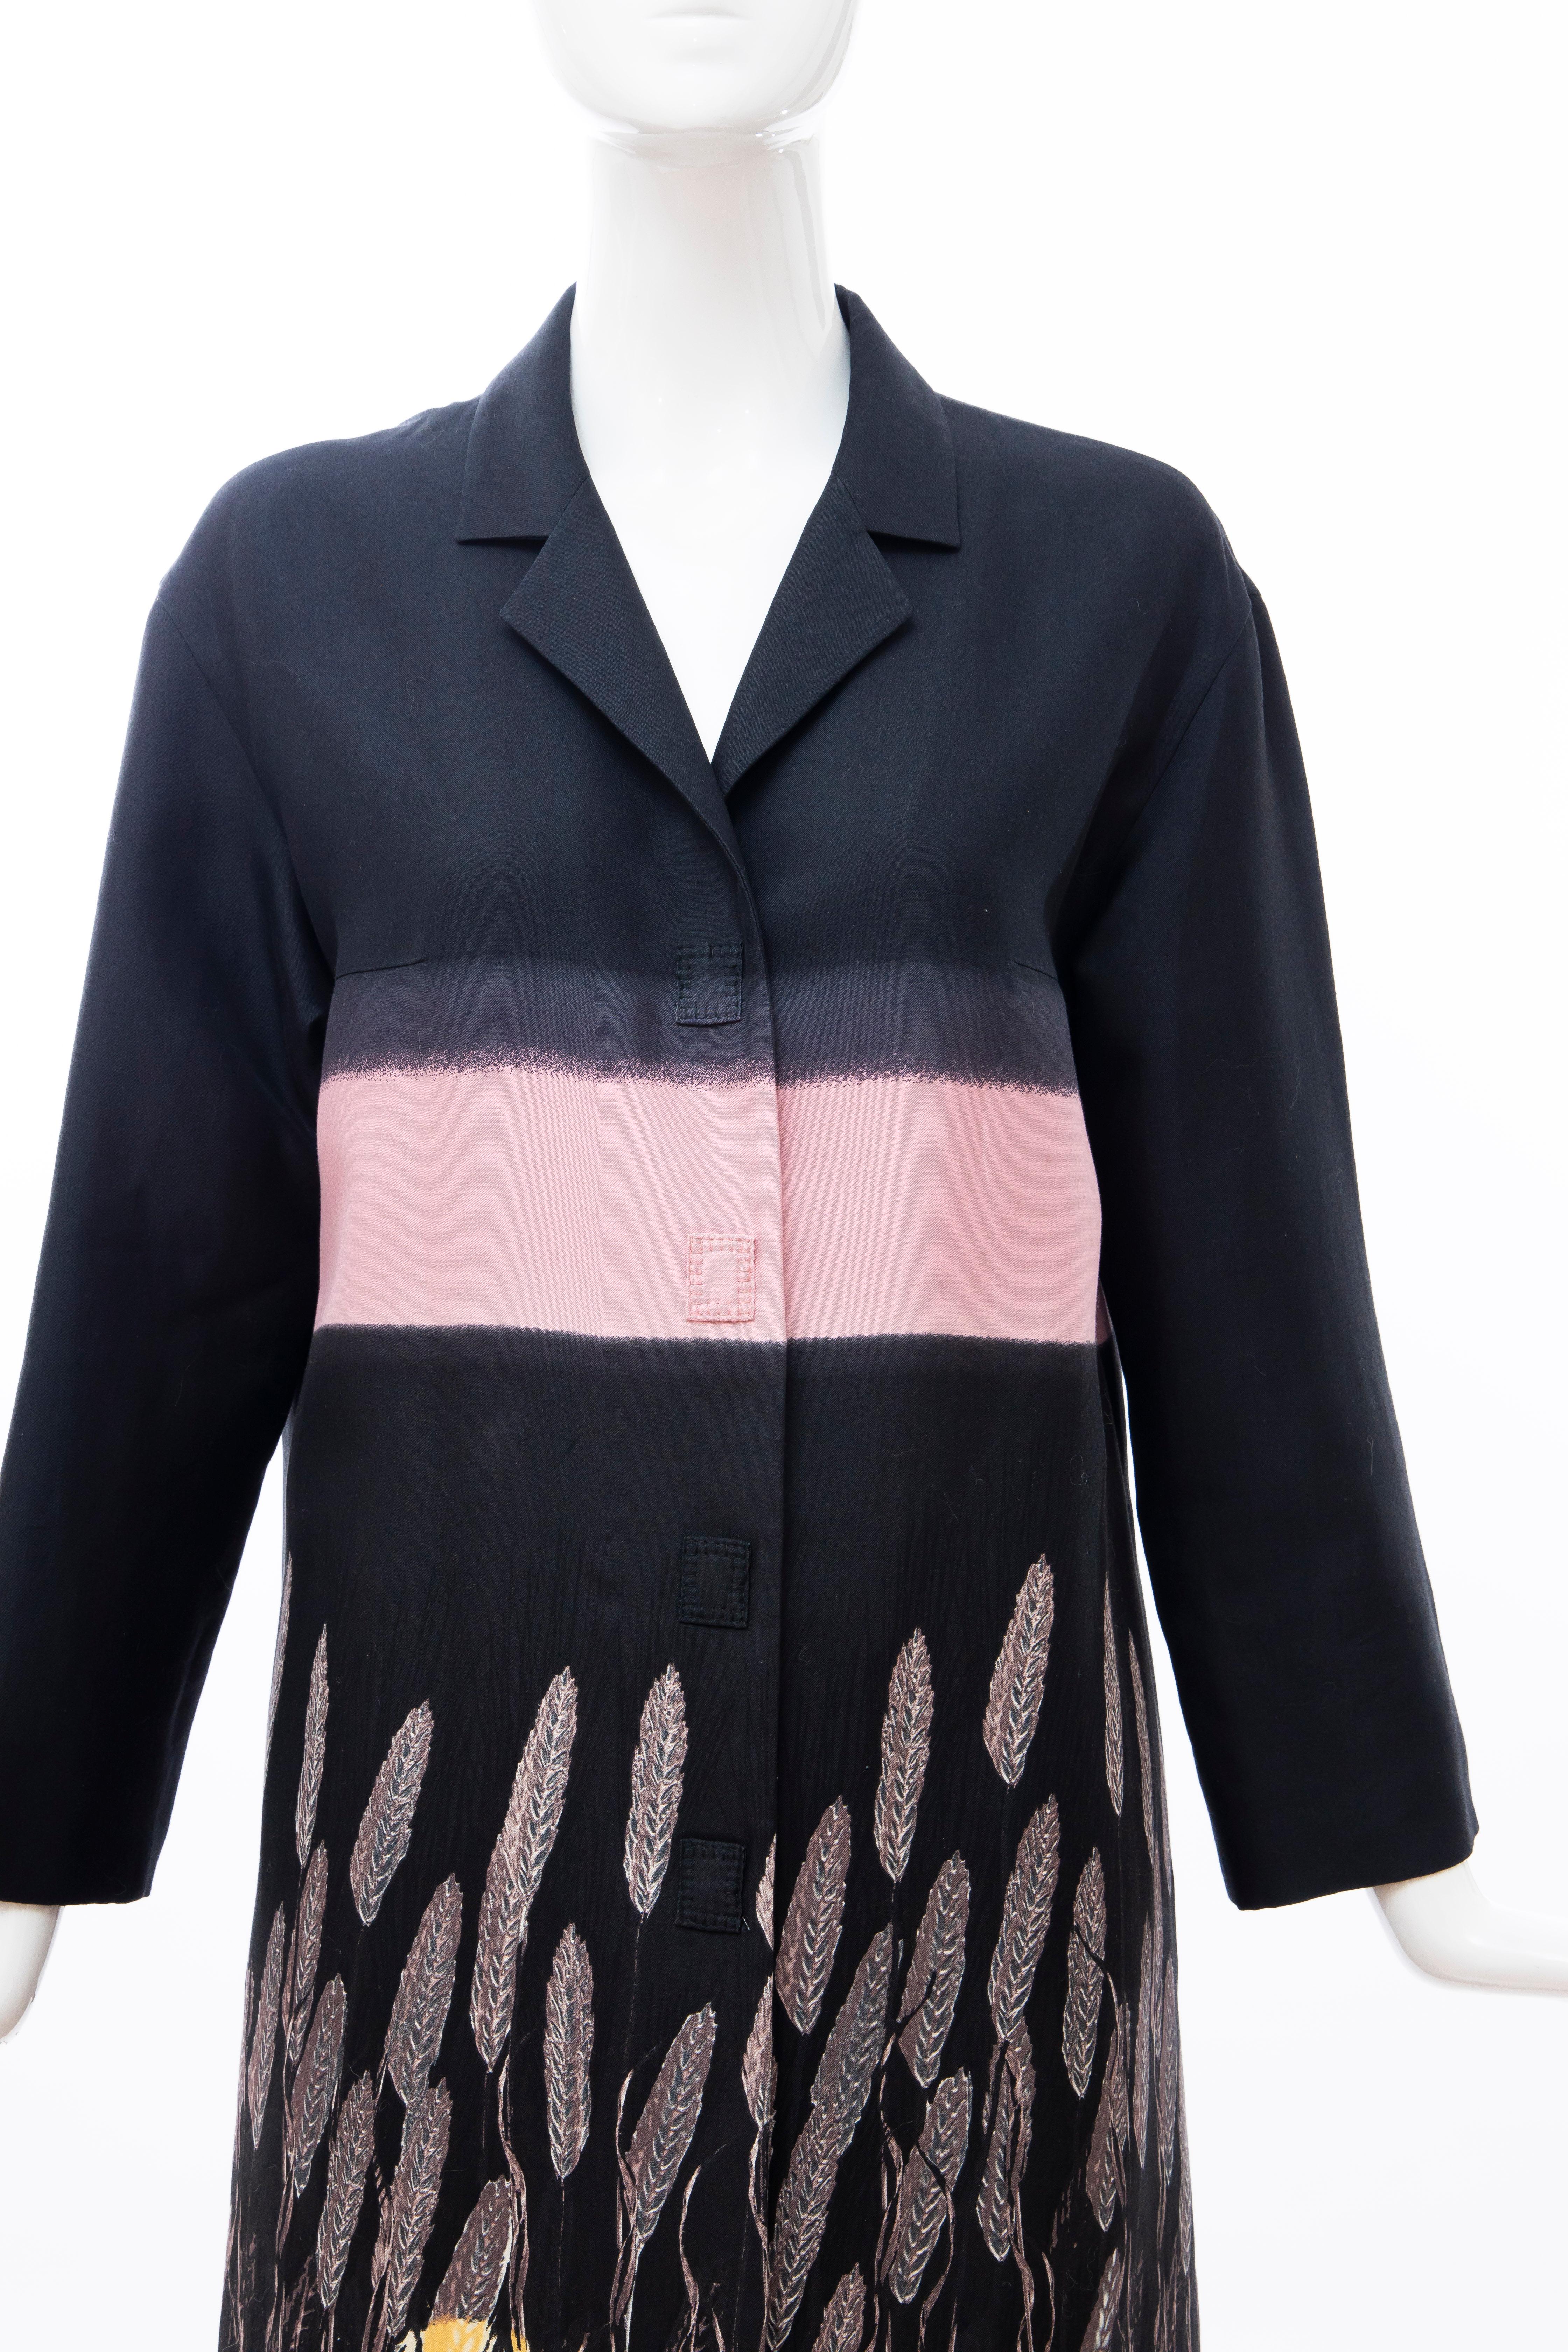 Prada Runway Black Silk Cotton Printed Snap Front Lightweight Coat, Spring 1998 In Excellent Condition For Sale In Cincinnati, OH